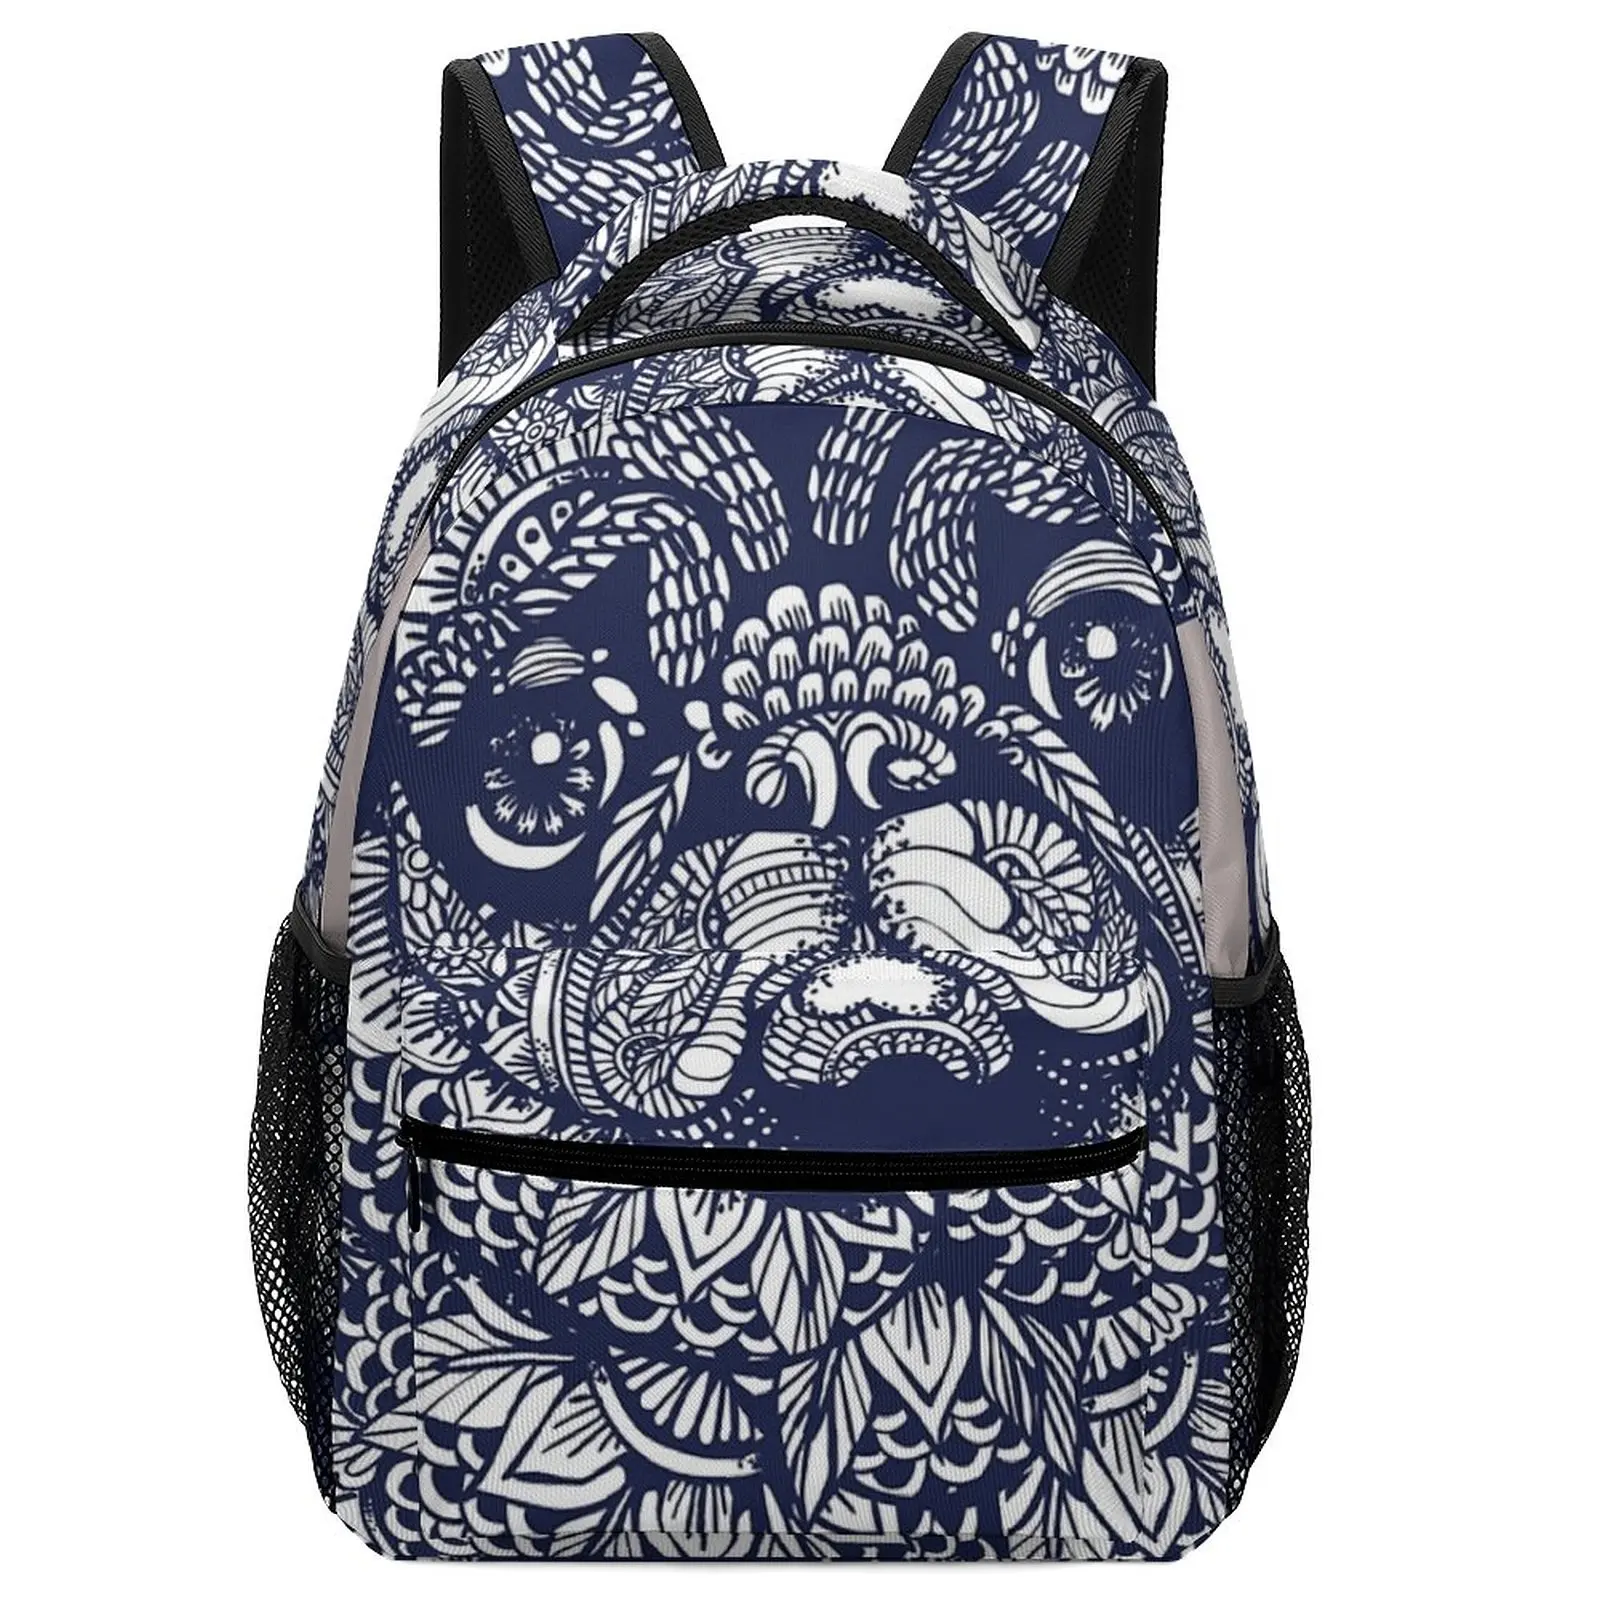 Mandala of Pug Boys Children Fun Teen College Girl Backpack Teenagers School Bags Personalized Bag Tag